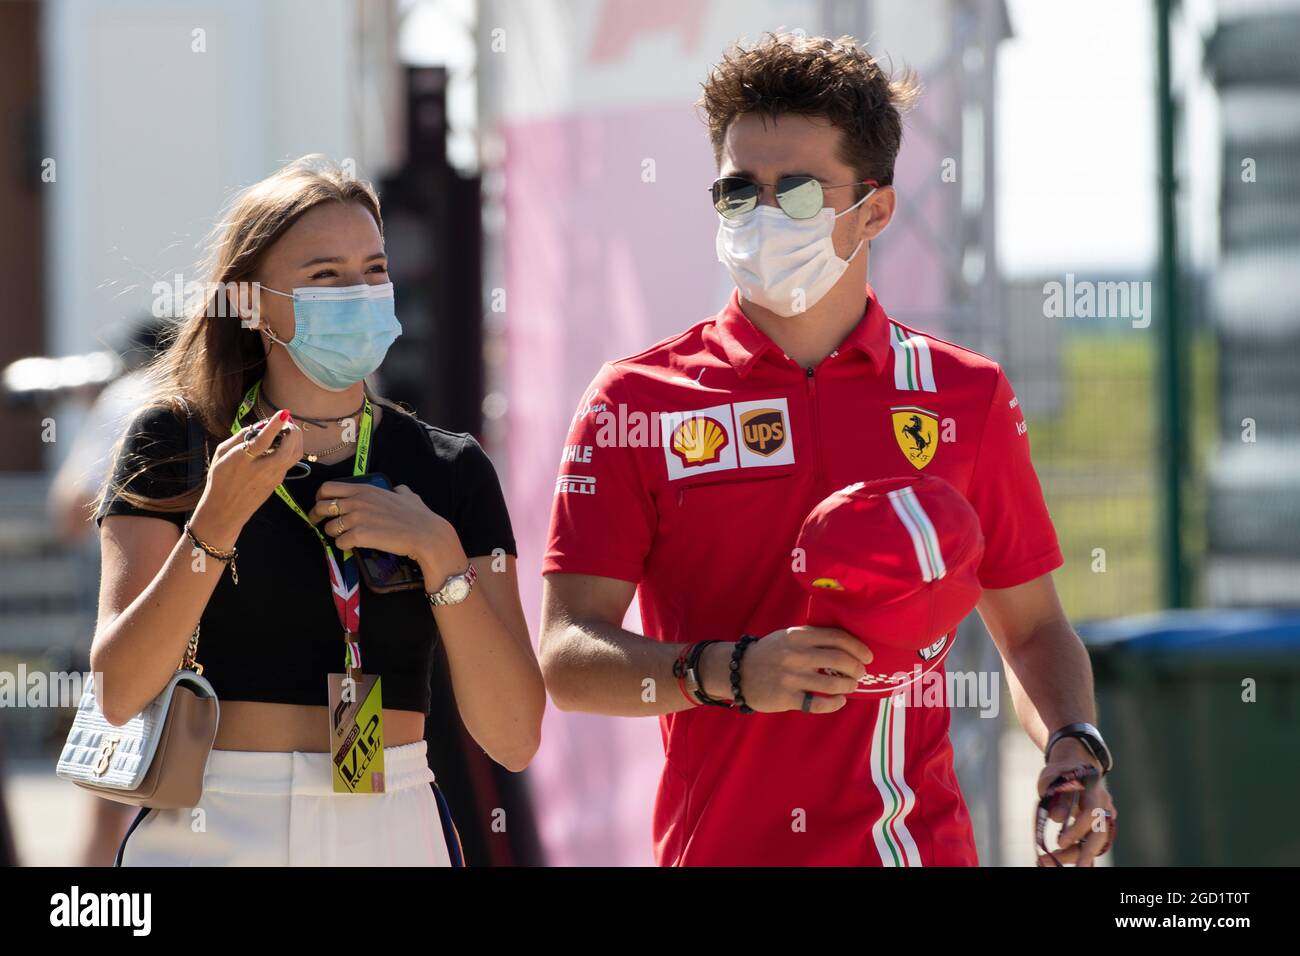 Charles Leclerc (mon) Ferrari avec sa petite amie Charlotte sine (mon). Grand Prix de Grande-Bretagne, samedi 17 juillet 2021. Silverstone, Angleterre. Banque D'Images